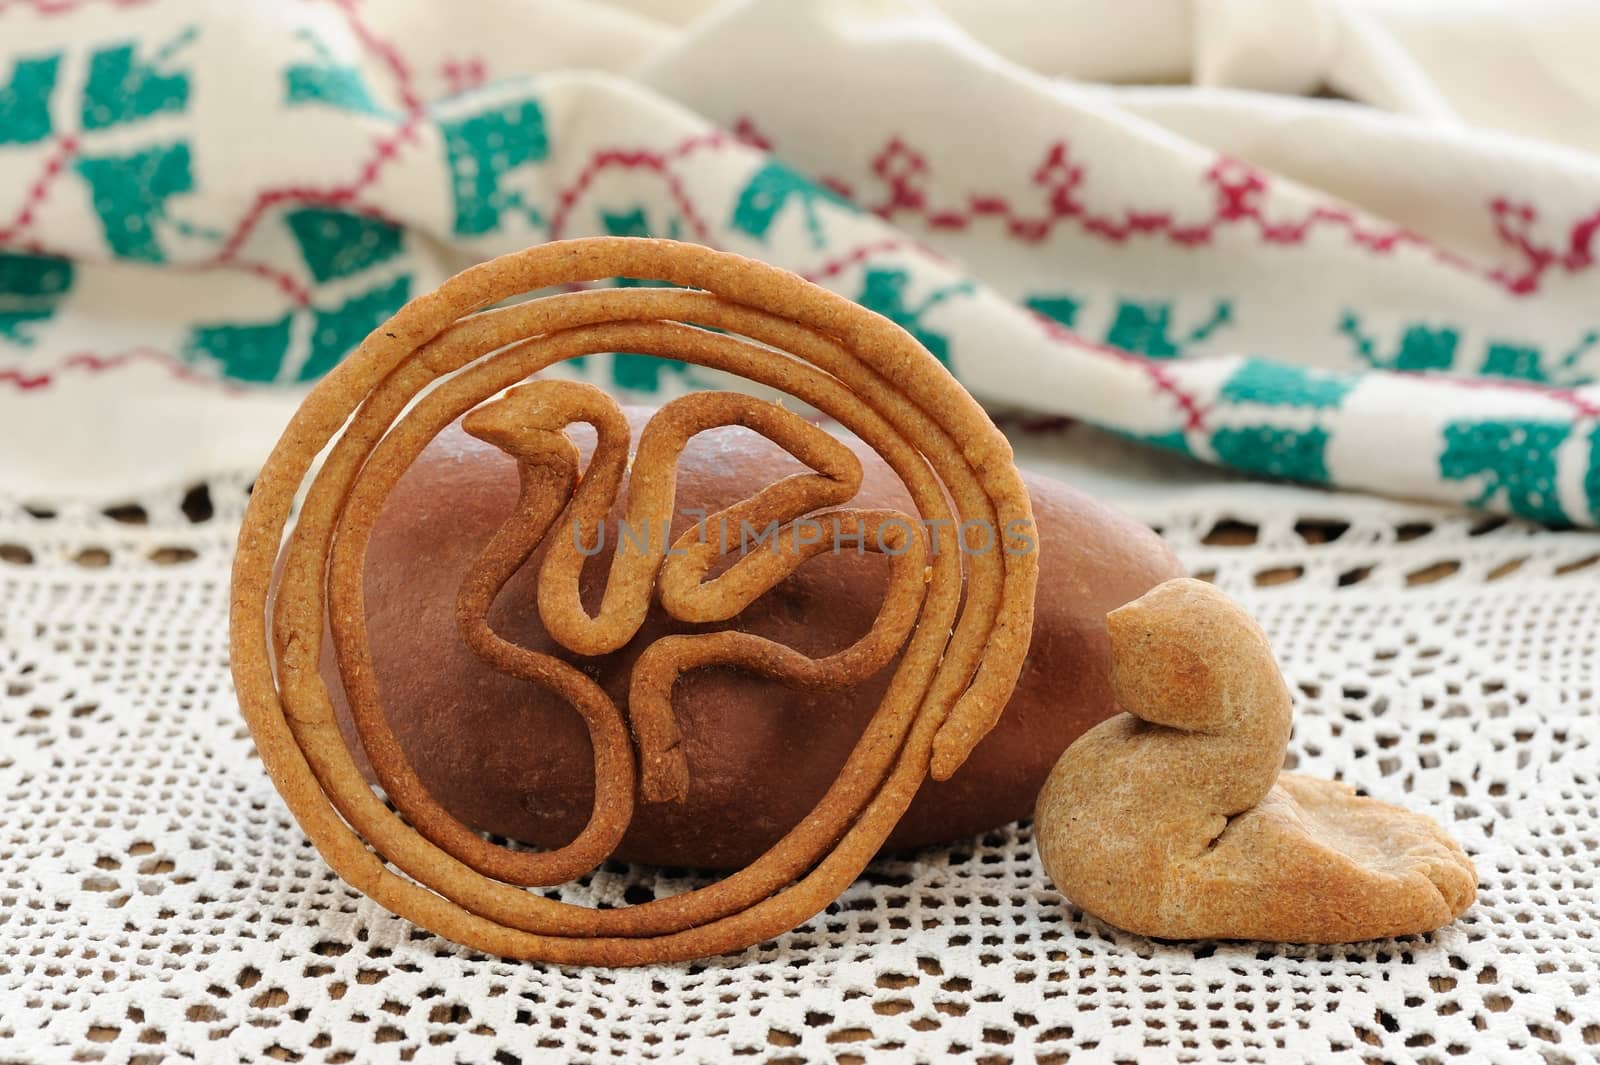 Teterki, Russian rye cookies for spring equinox selebration horizontal